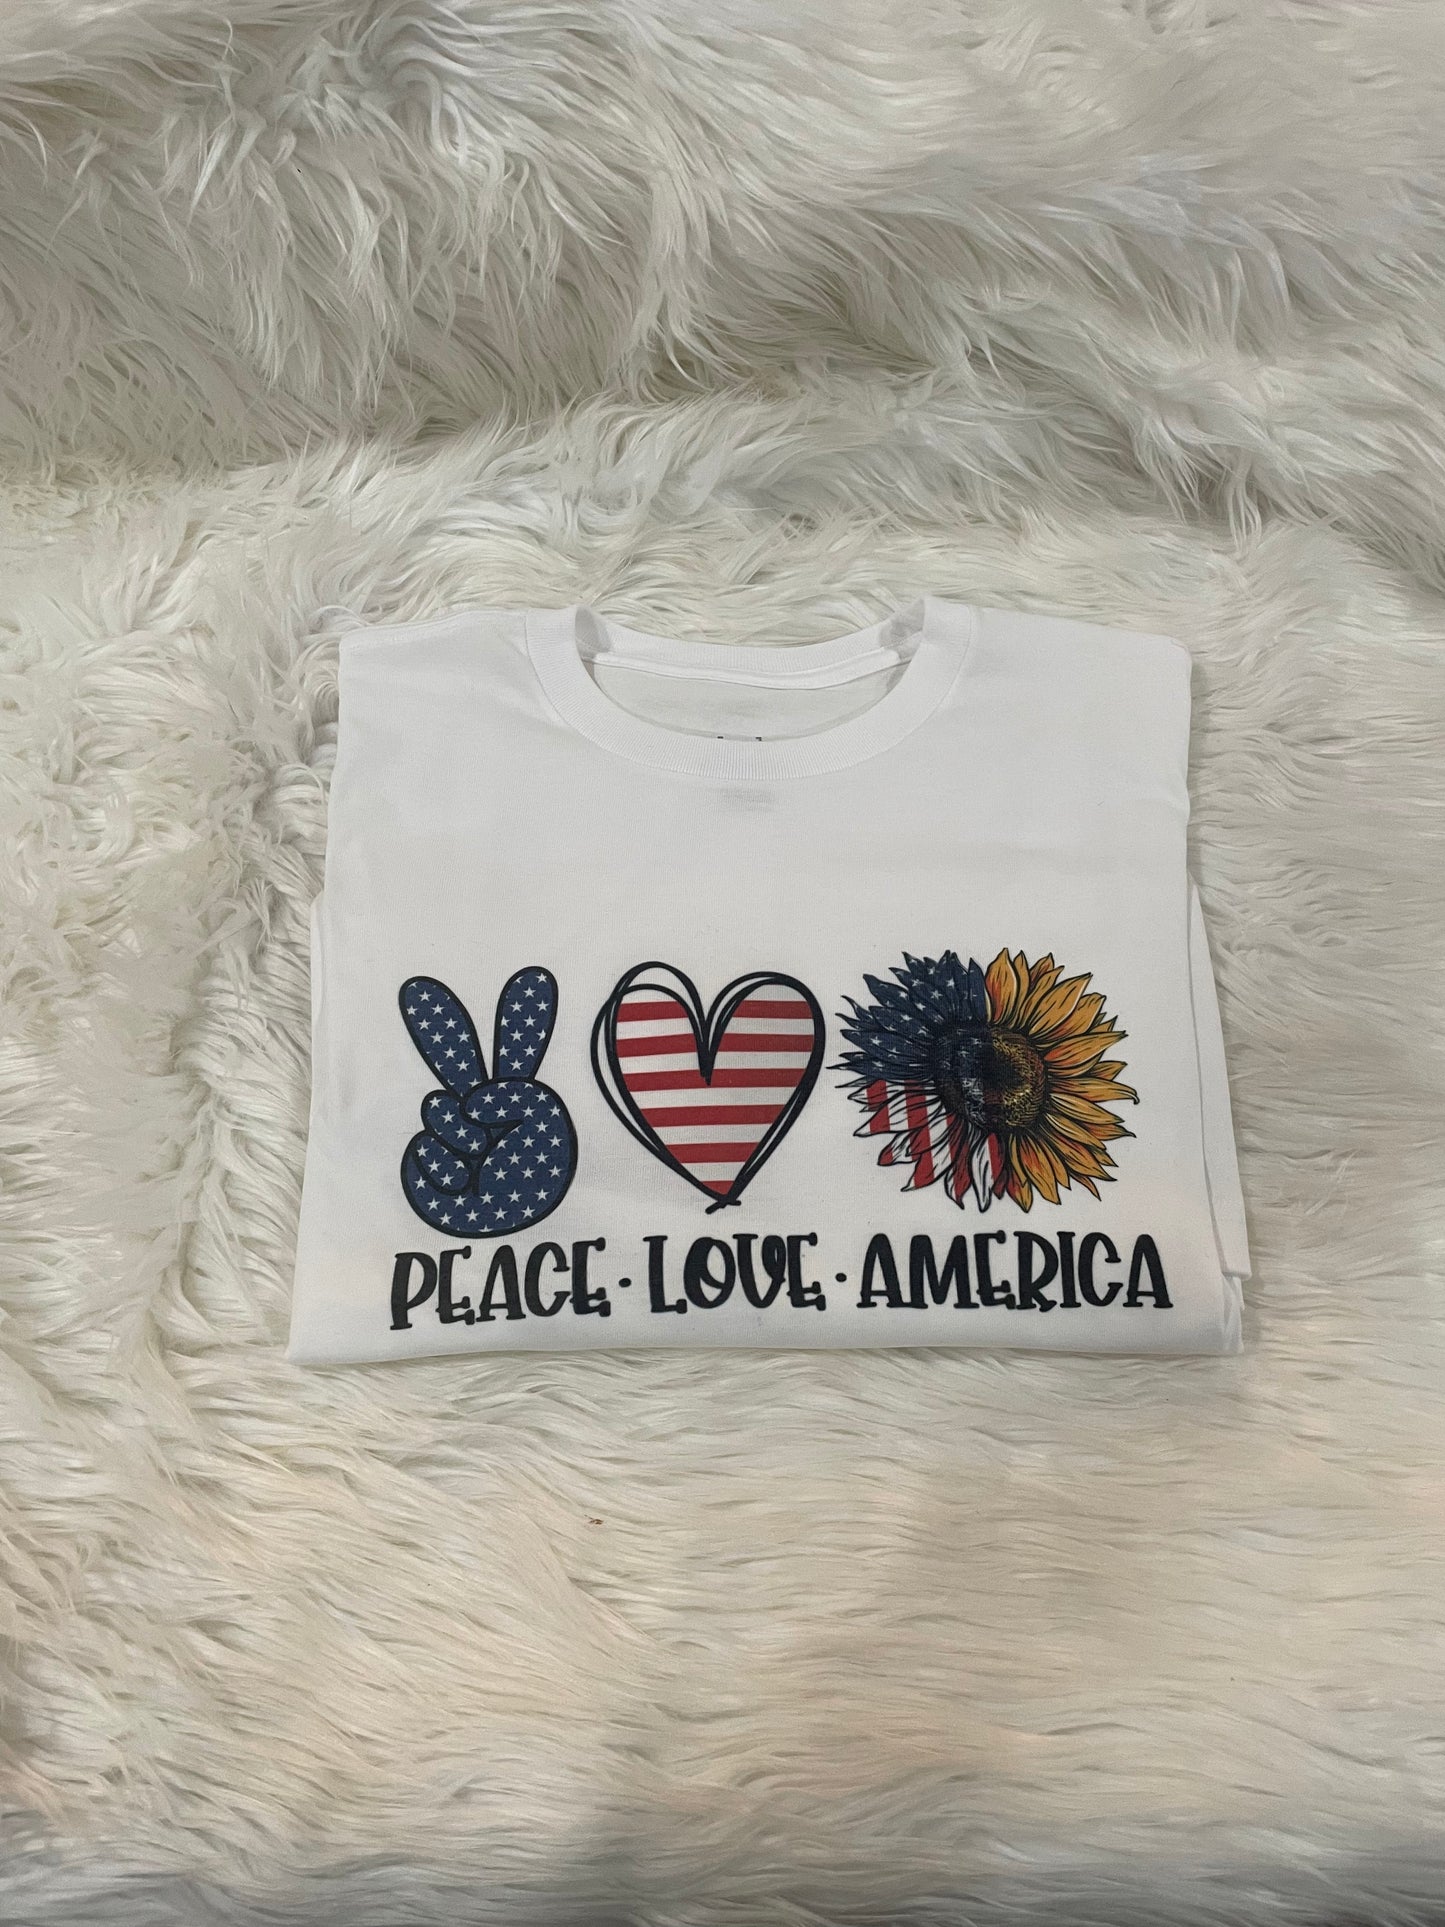 Peace Love America Shirt